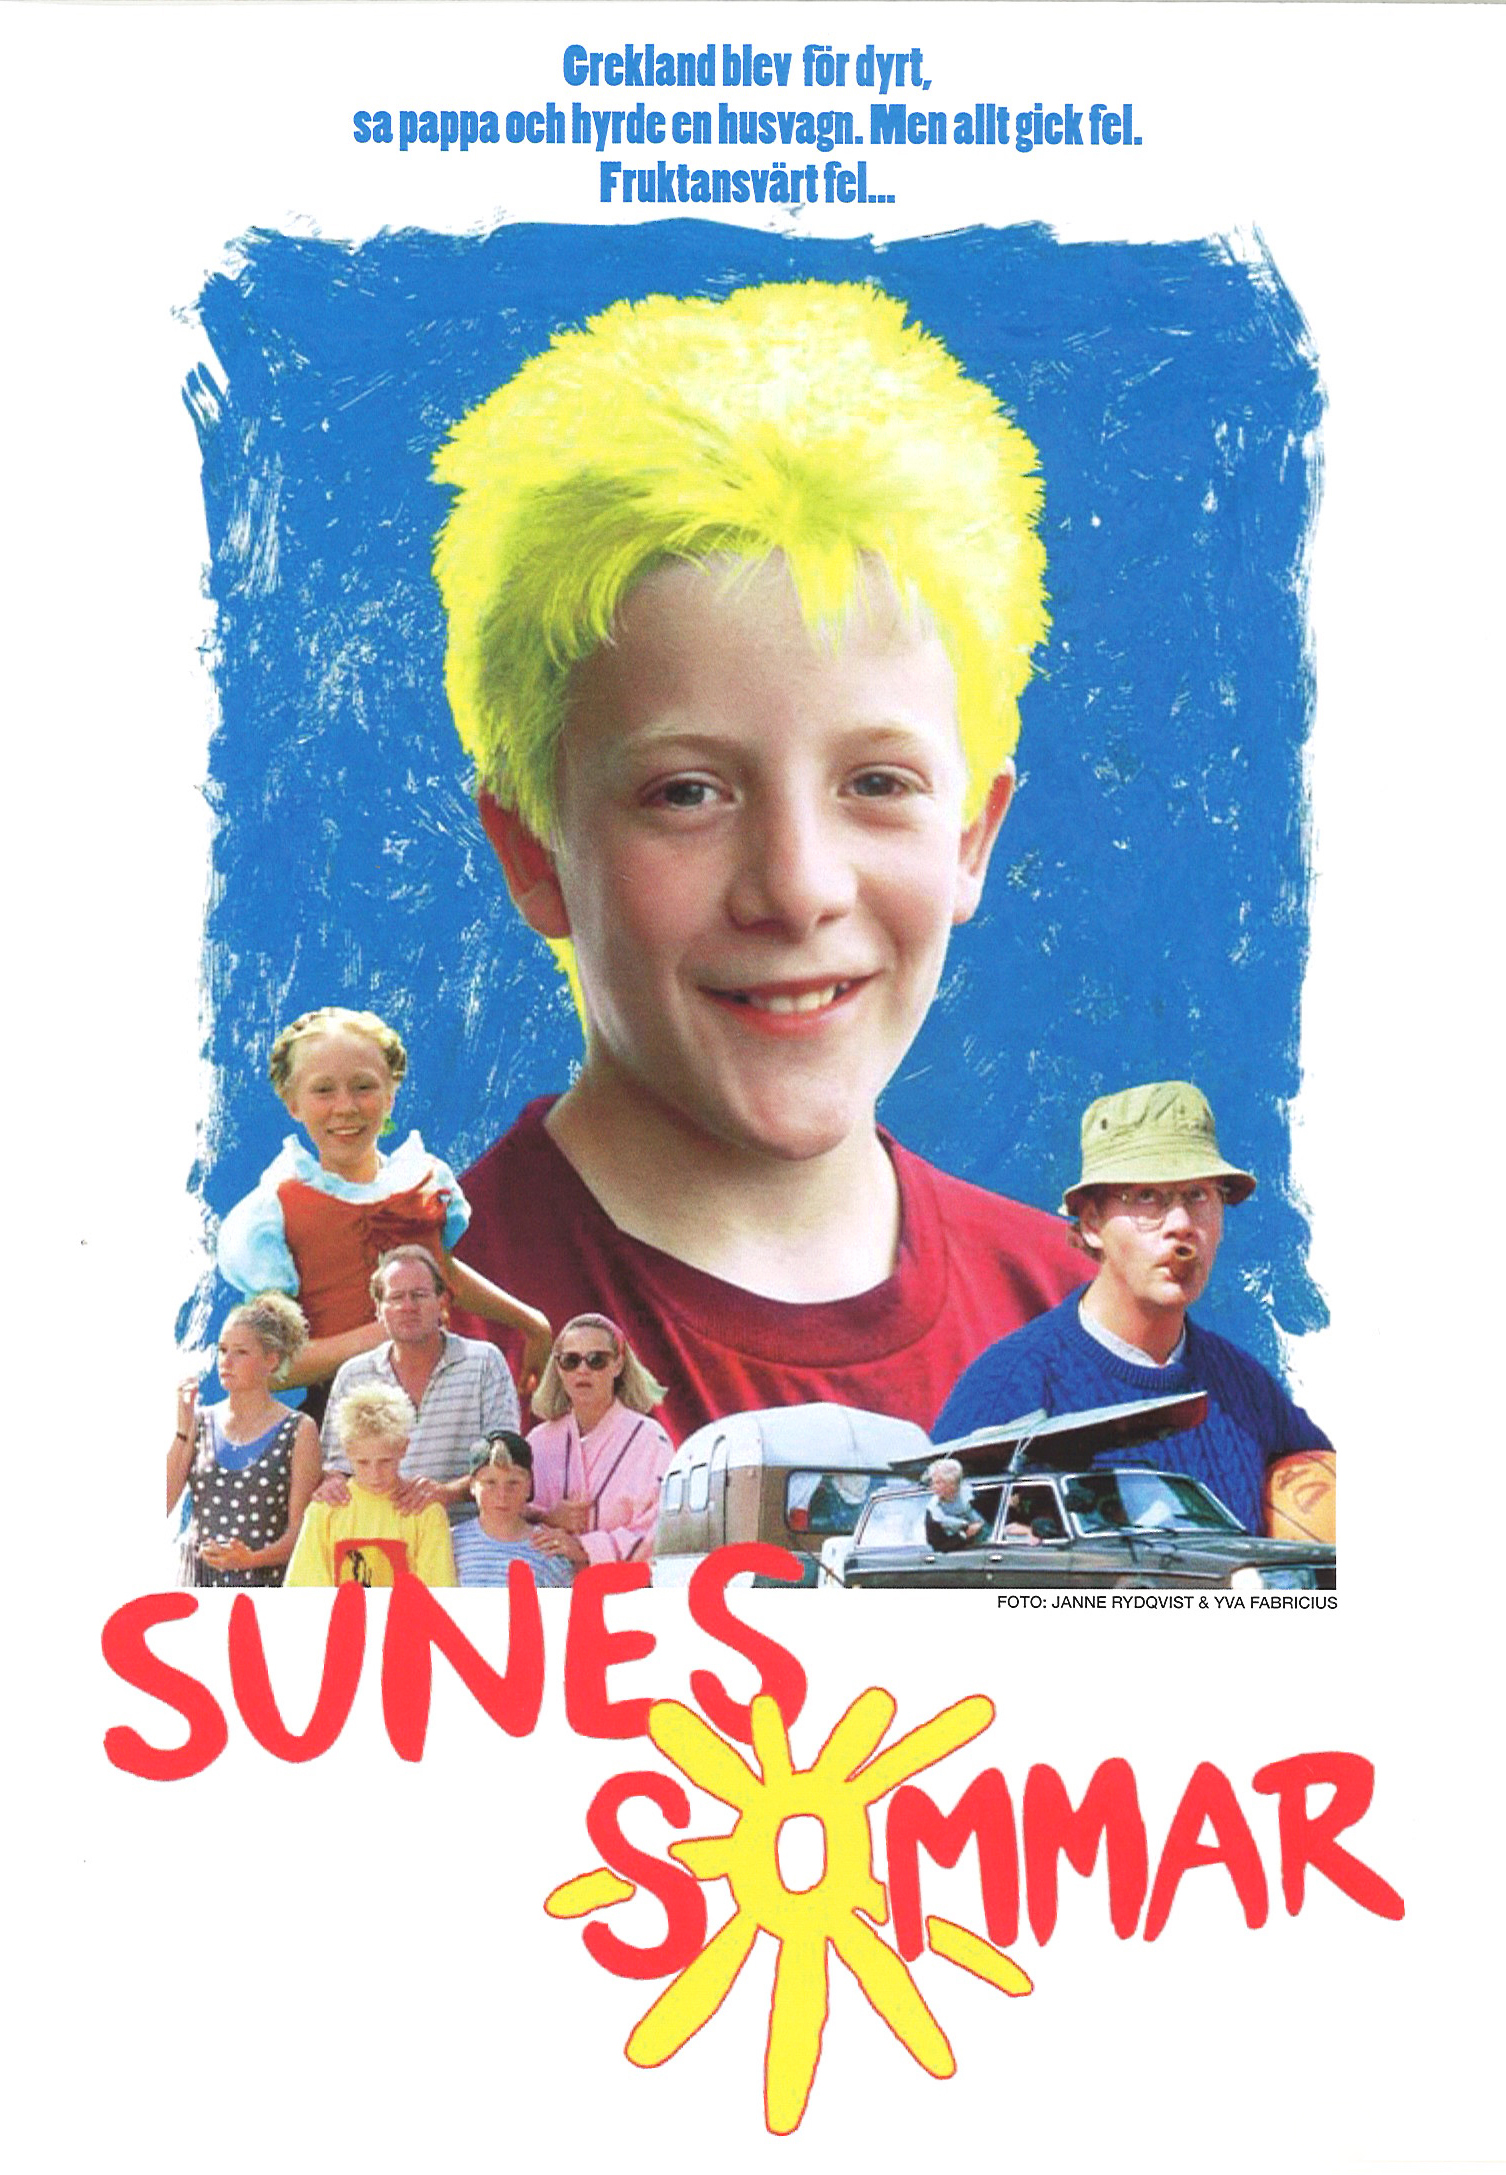 Omslagsbild på filmen Sunes sommar